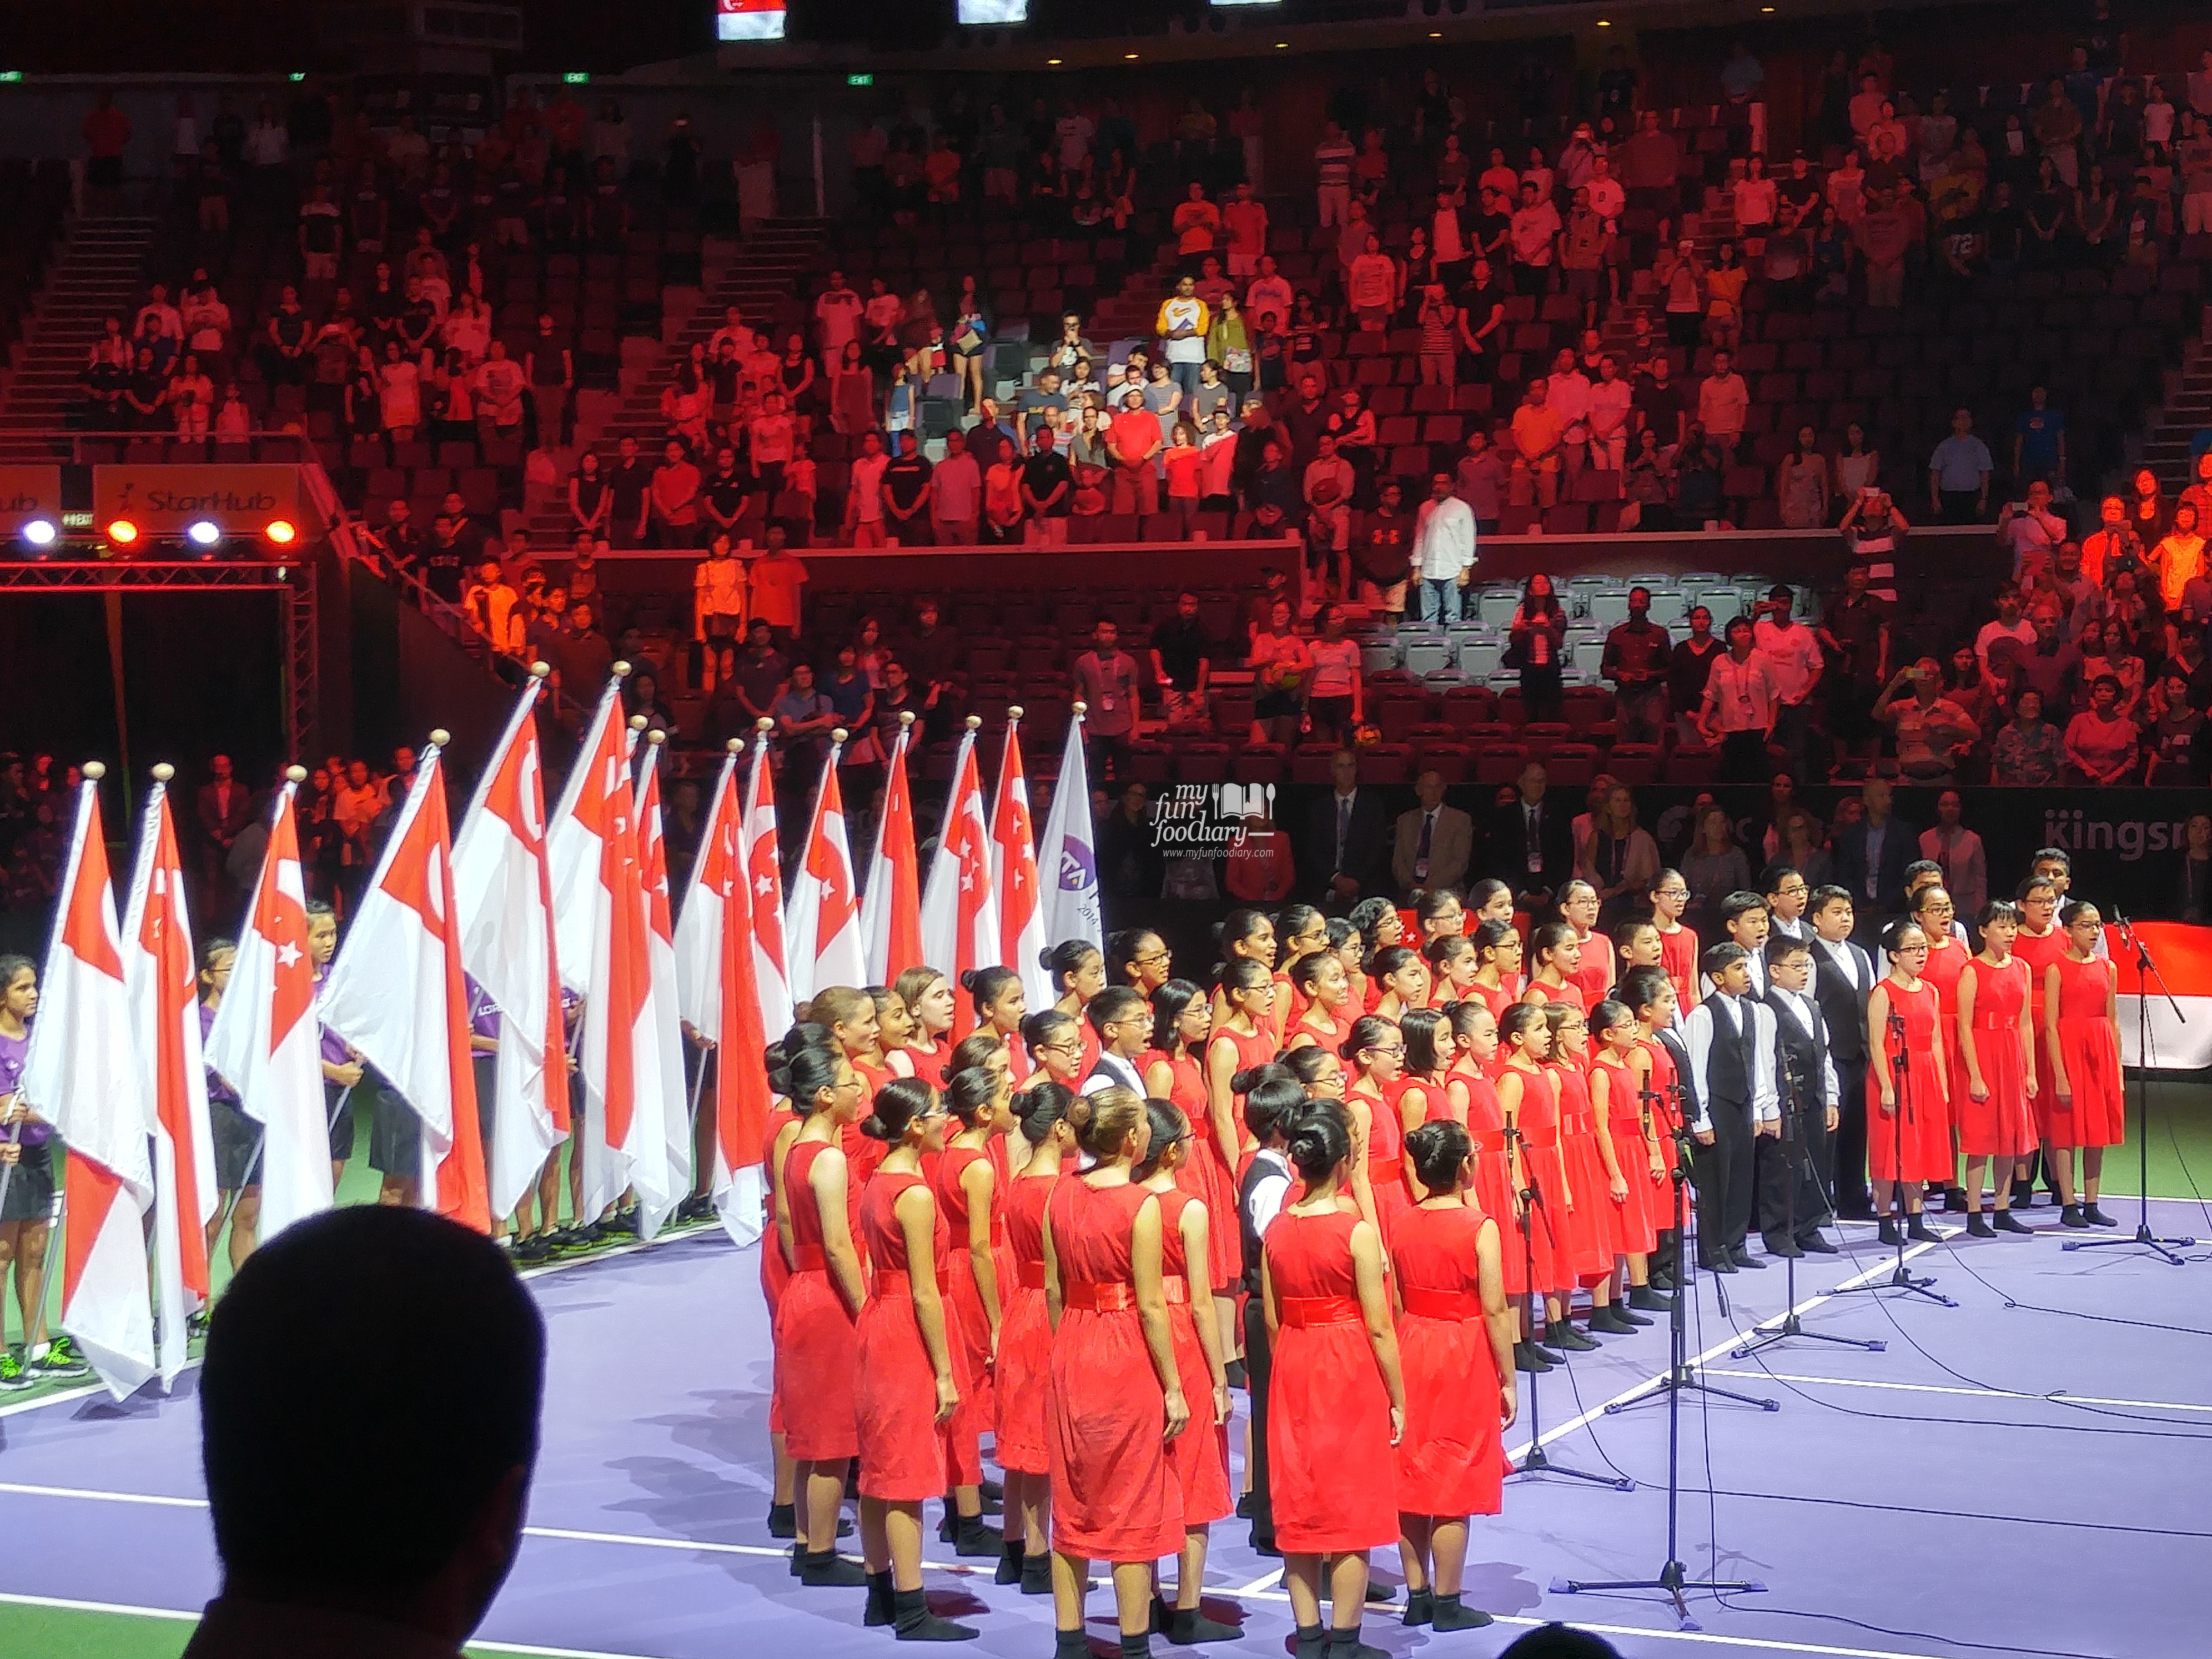 Opening Ceremony at Singapore Indoor Stadium by Myfunfoodiary